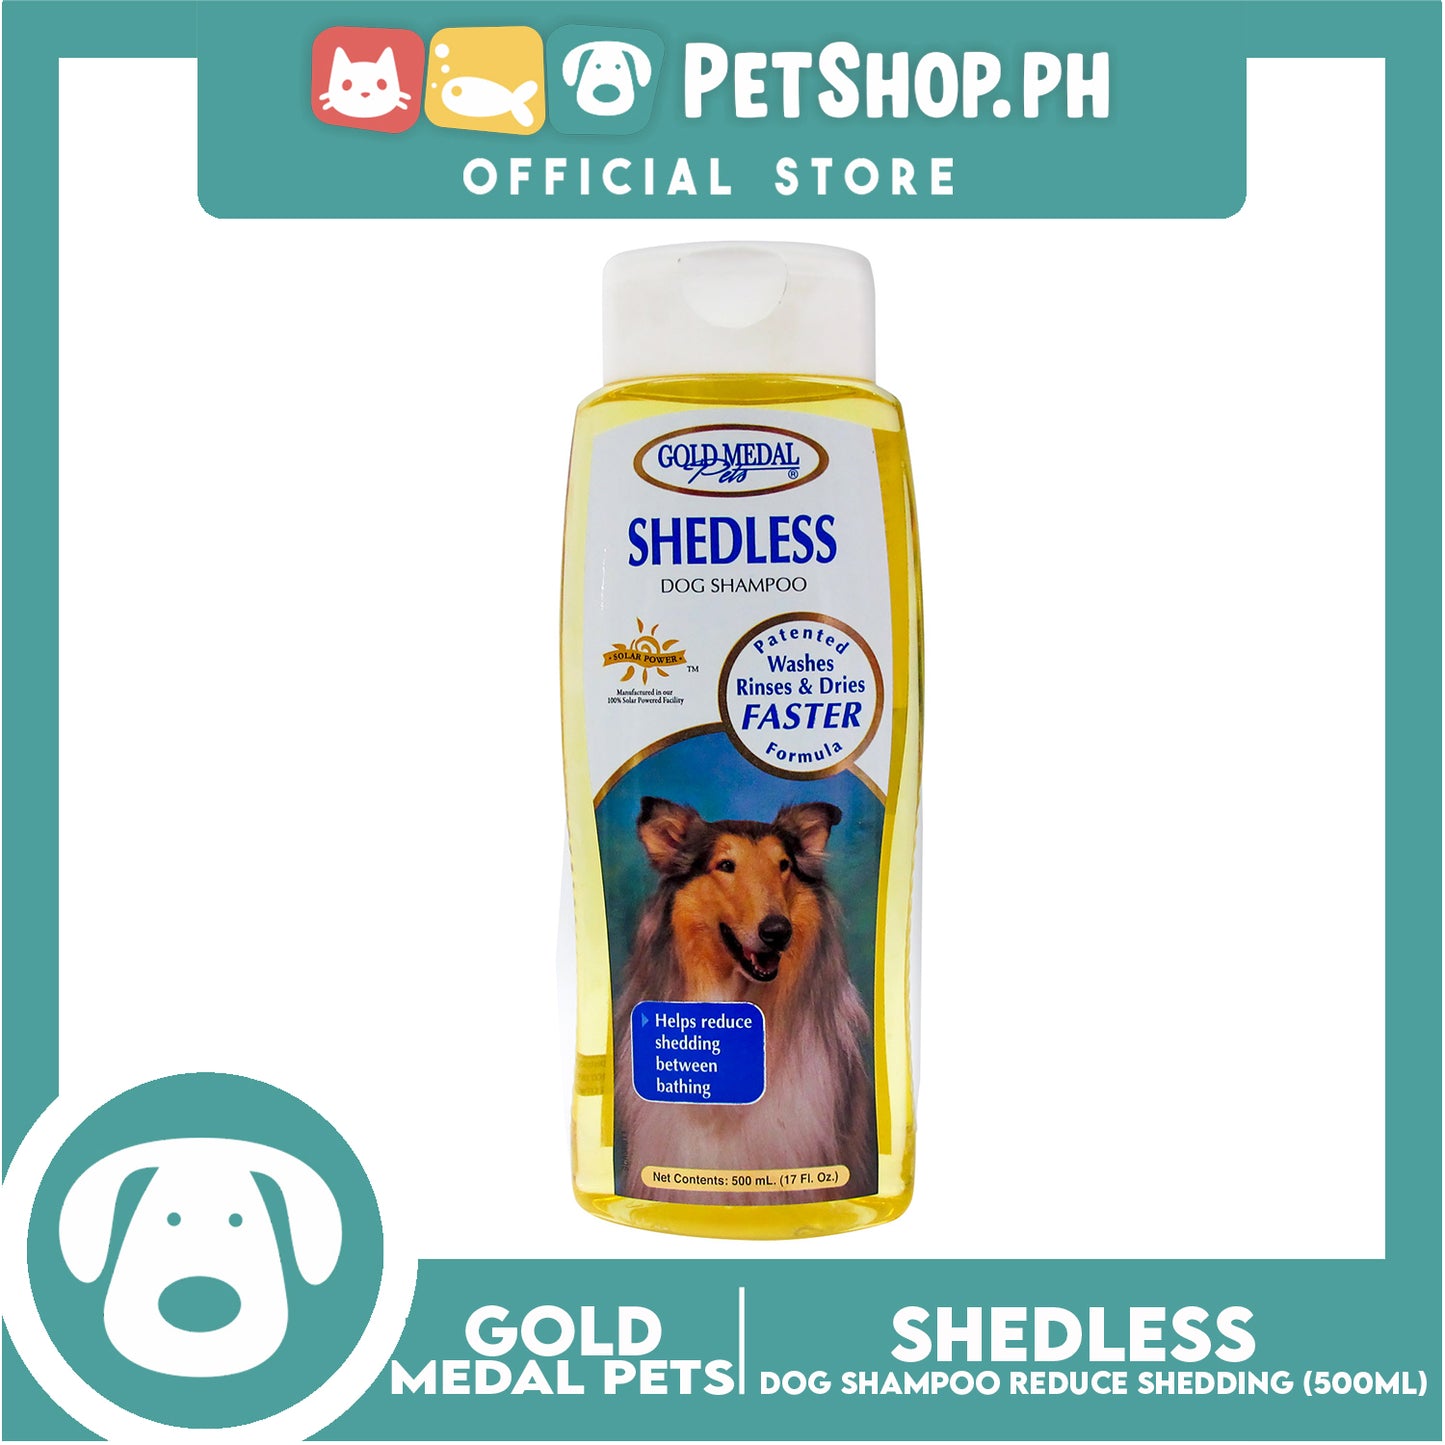 Gold Medal Pets Shedless Dog Shampoo 17oz Helps Reduce Shedding Between Bathing